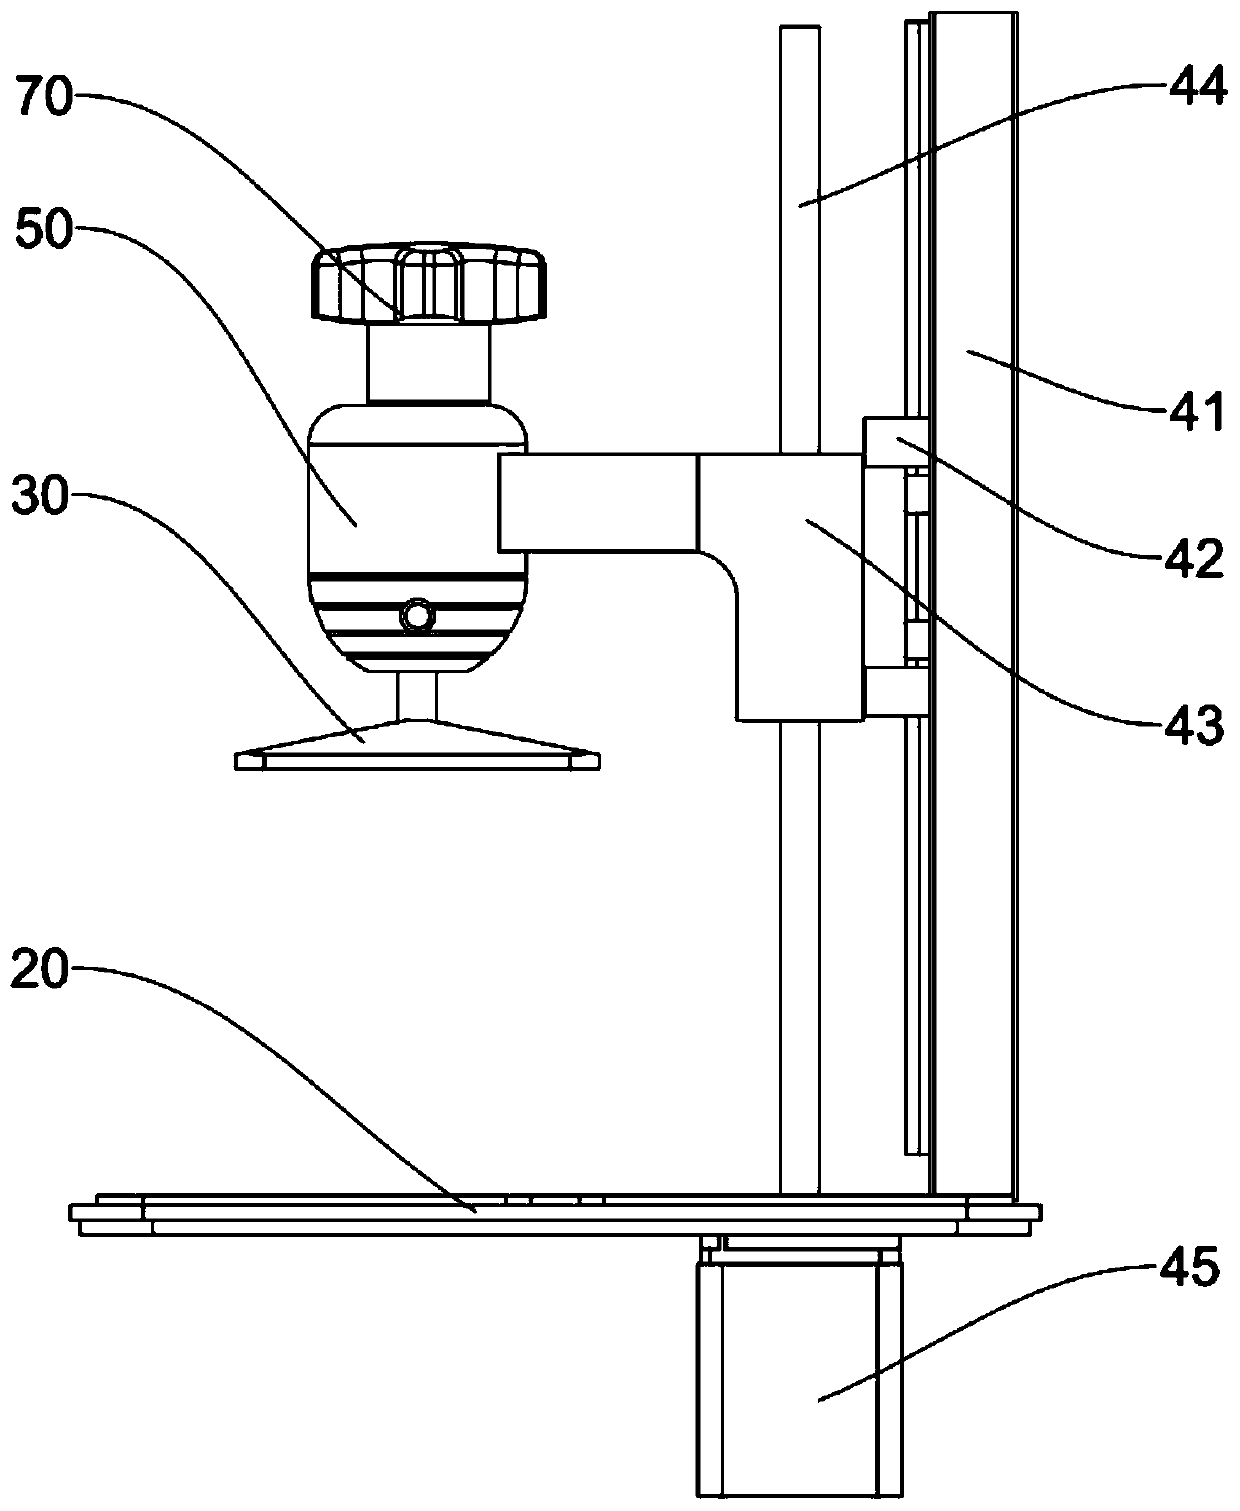 Platform adjustment mechanism of photocuring 3D printer, and photocuring 3D printer